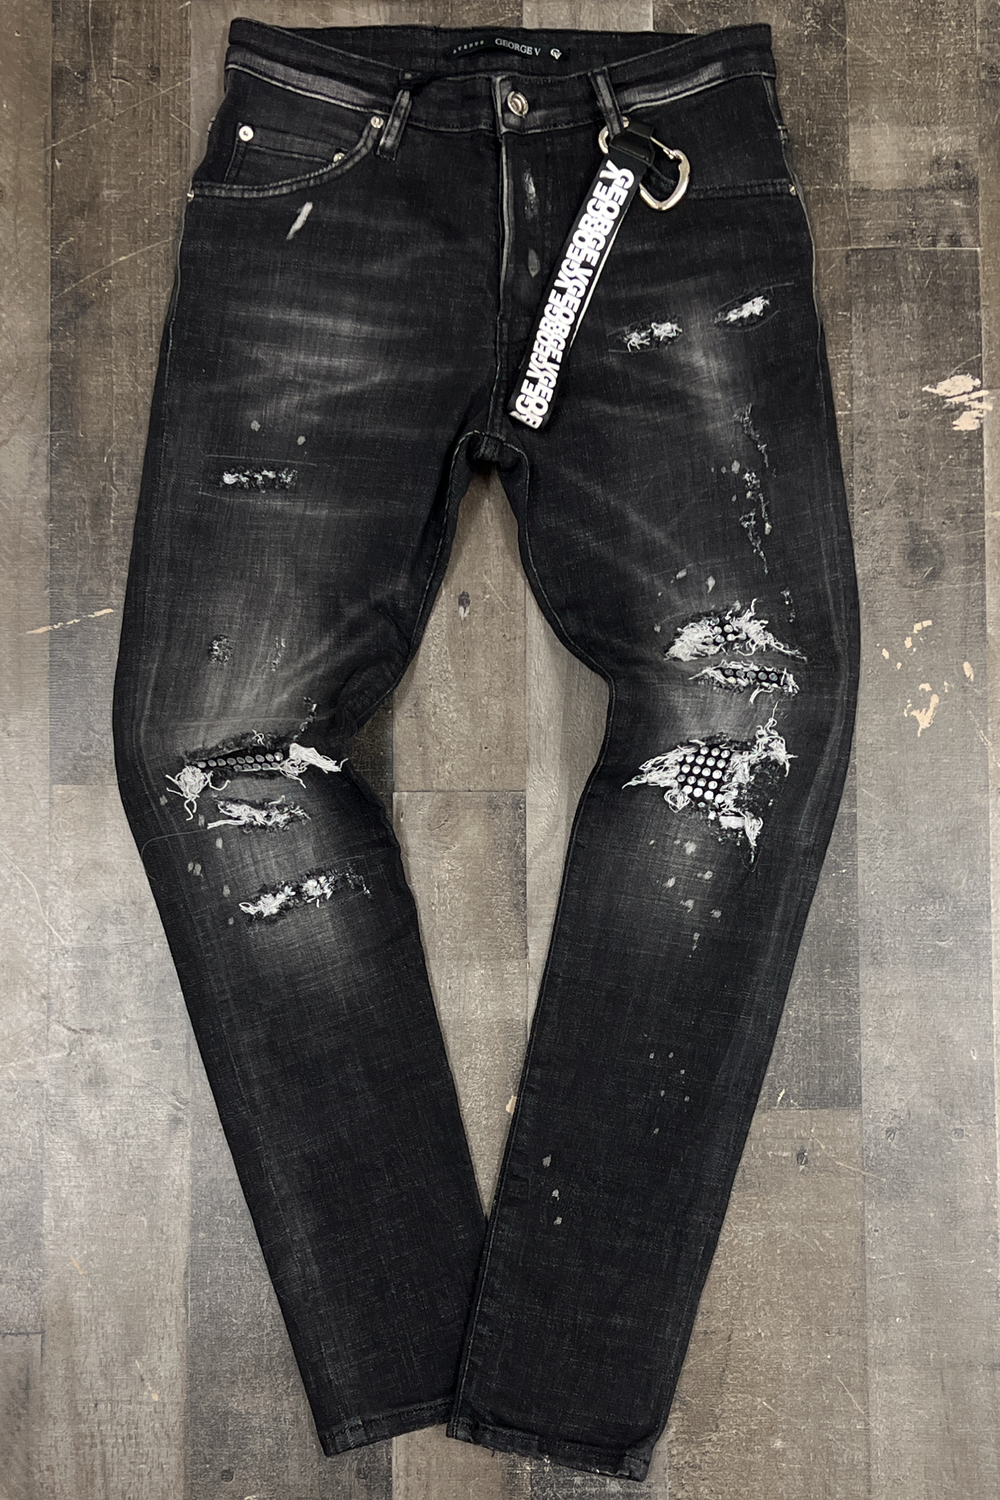 George V- skater jeans